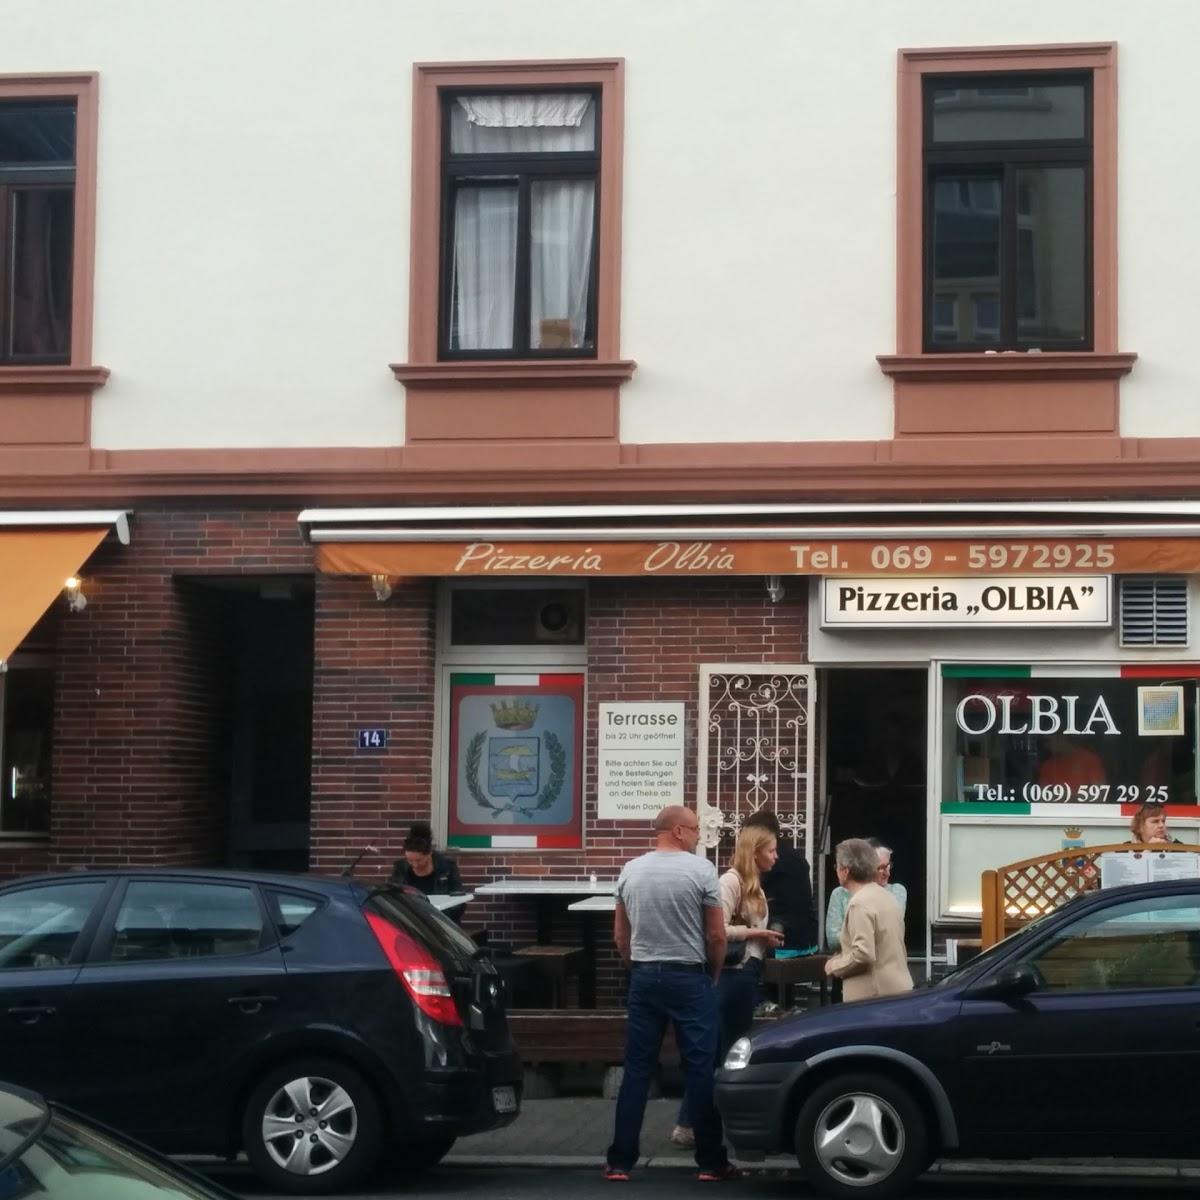 Restaurant "Pizzeria Olbia" in Frankfurt am Main